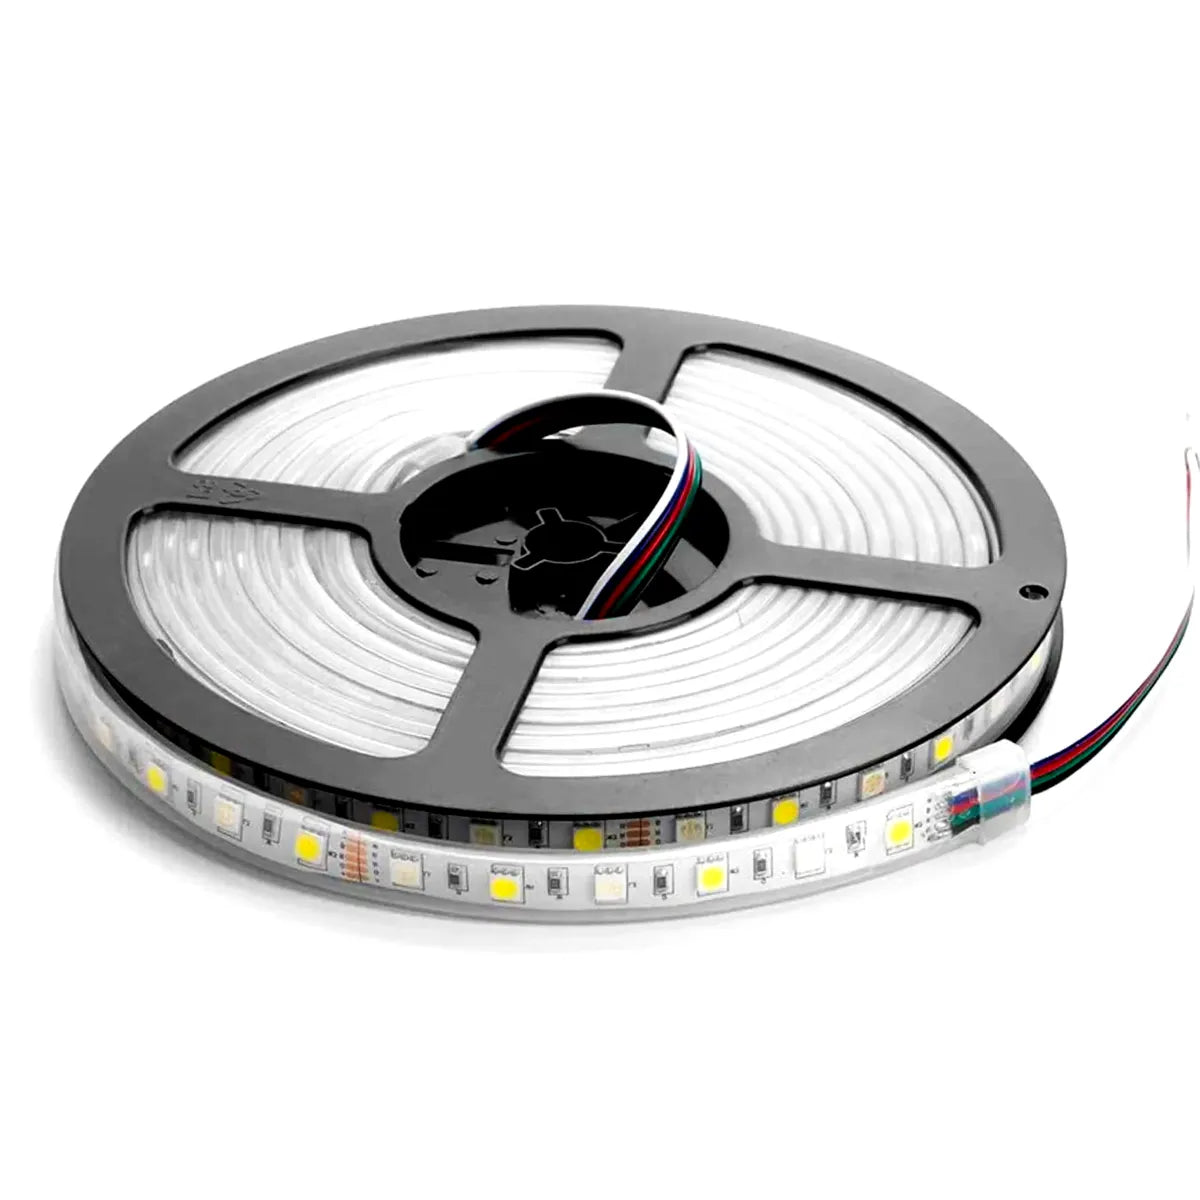 Sehr helles 5m RGB LED Strip, Band mit 14,4W pro Meter und 300 RGB SMD